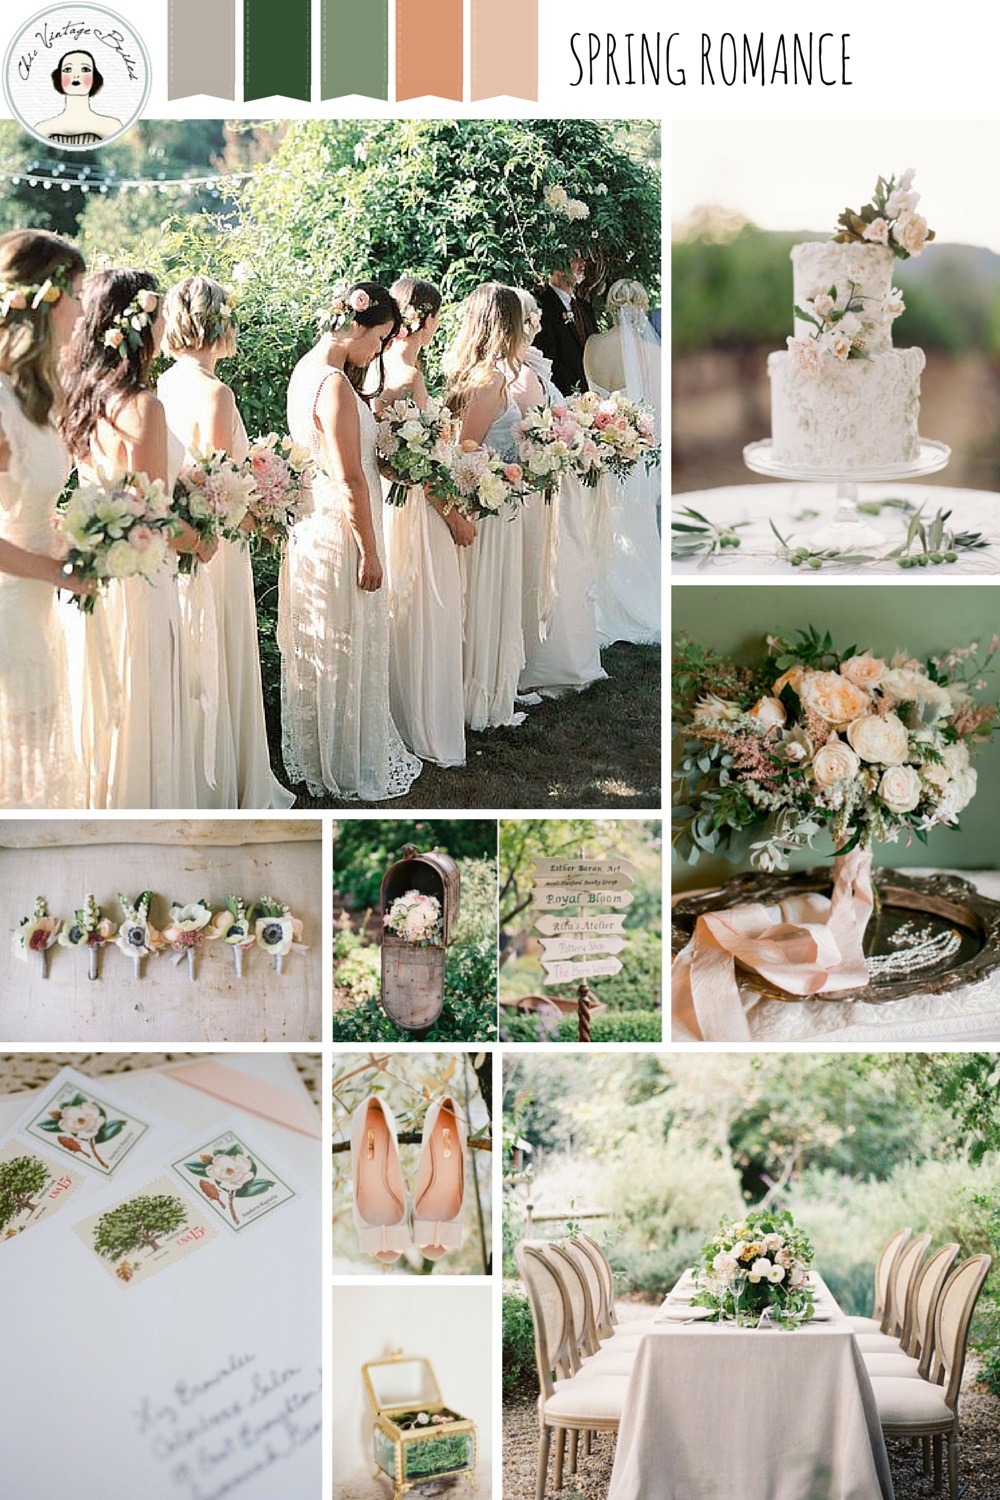 Spring Romance – Garden Wedding Inspiration in Pretty Pastel Shades of Peach, Blush & Green